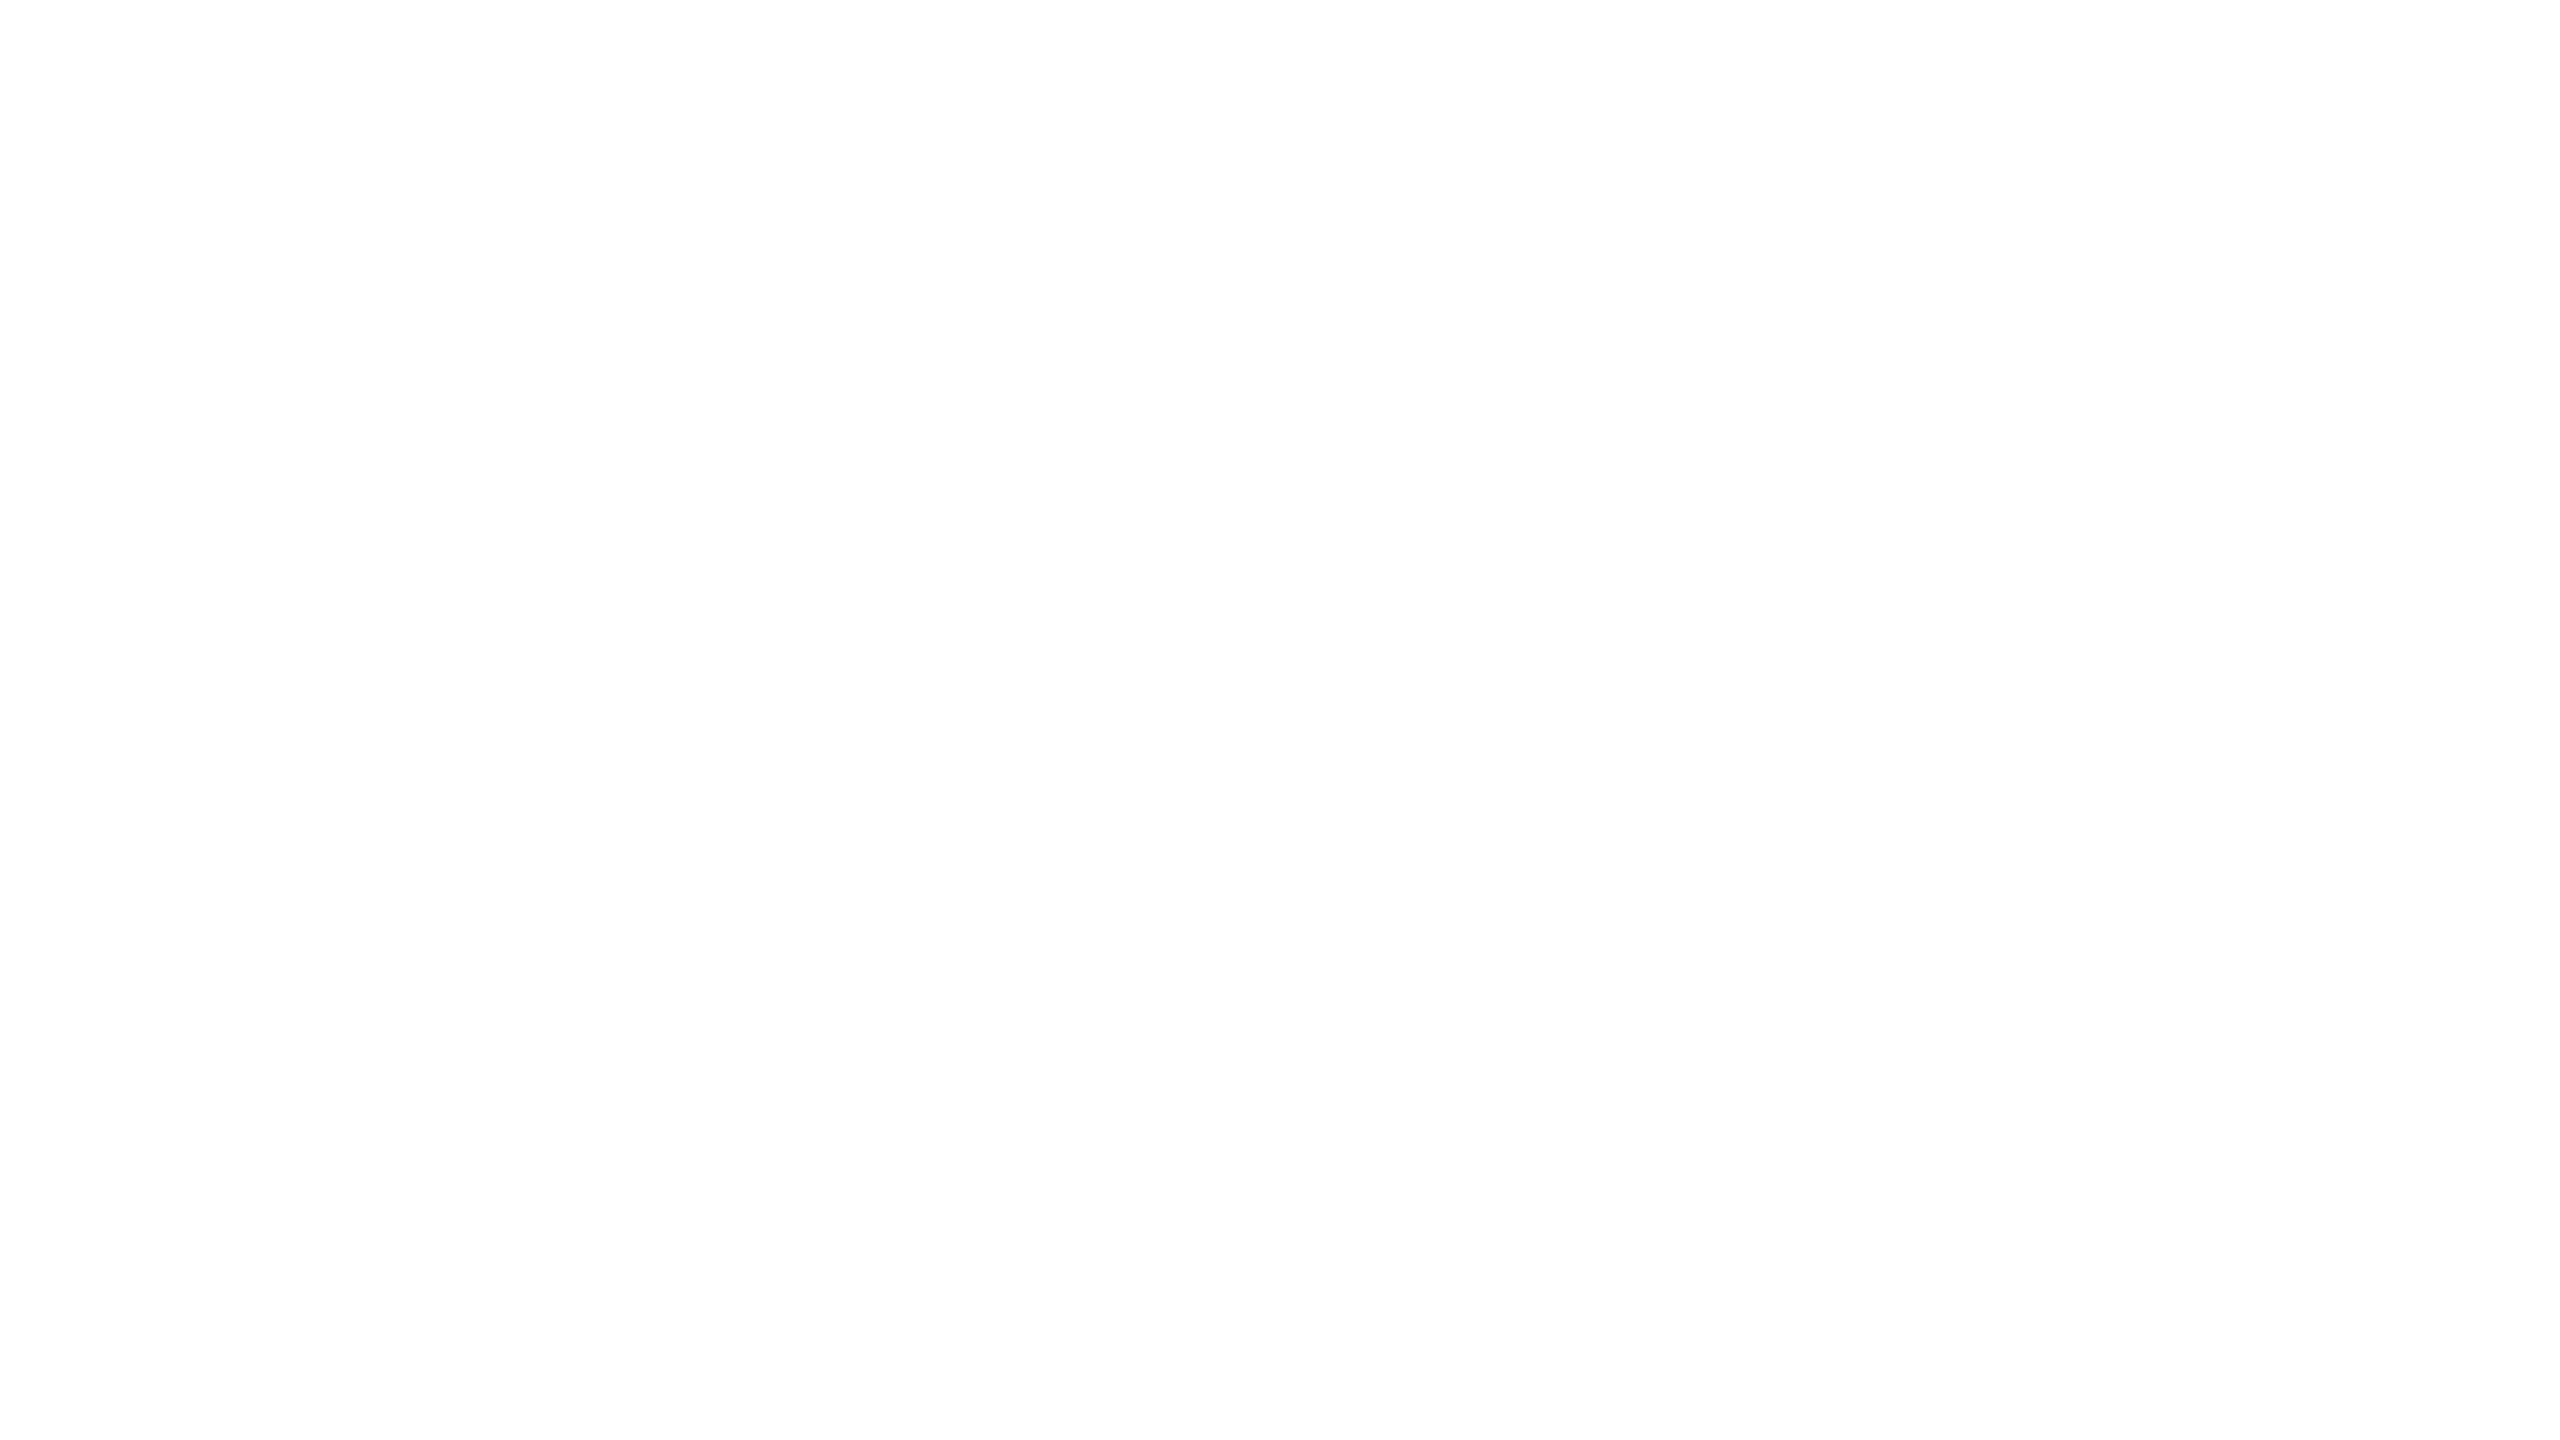 Viddle Drive